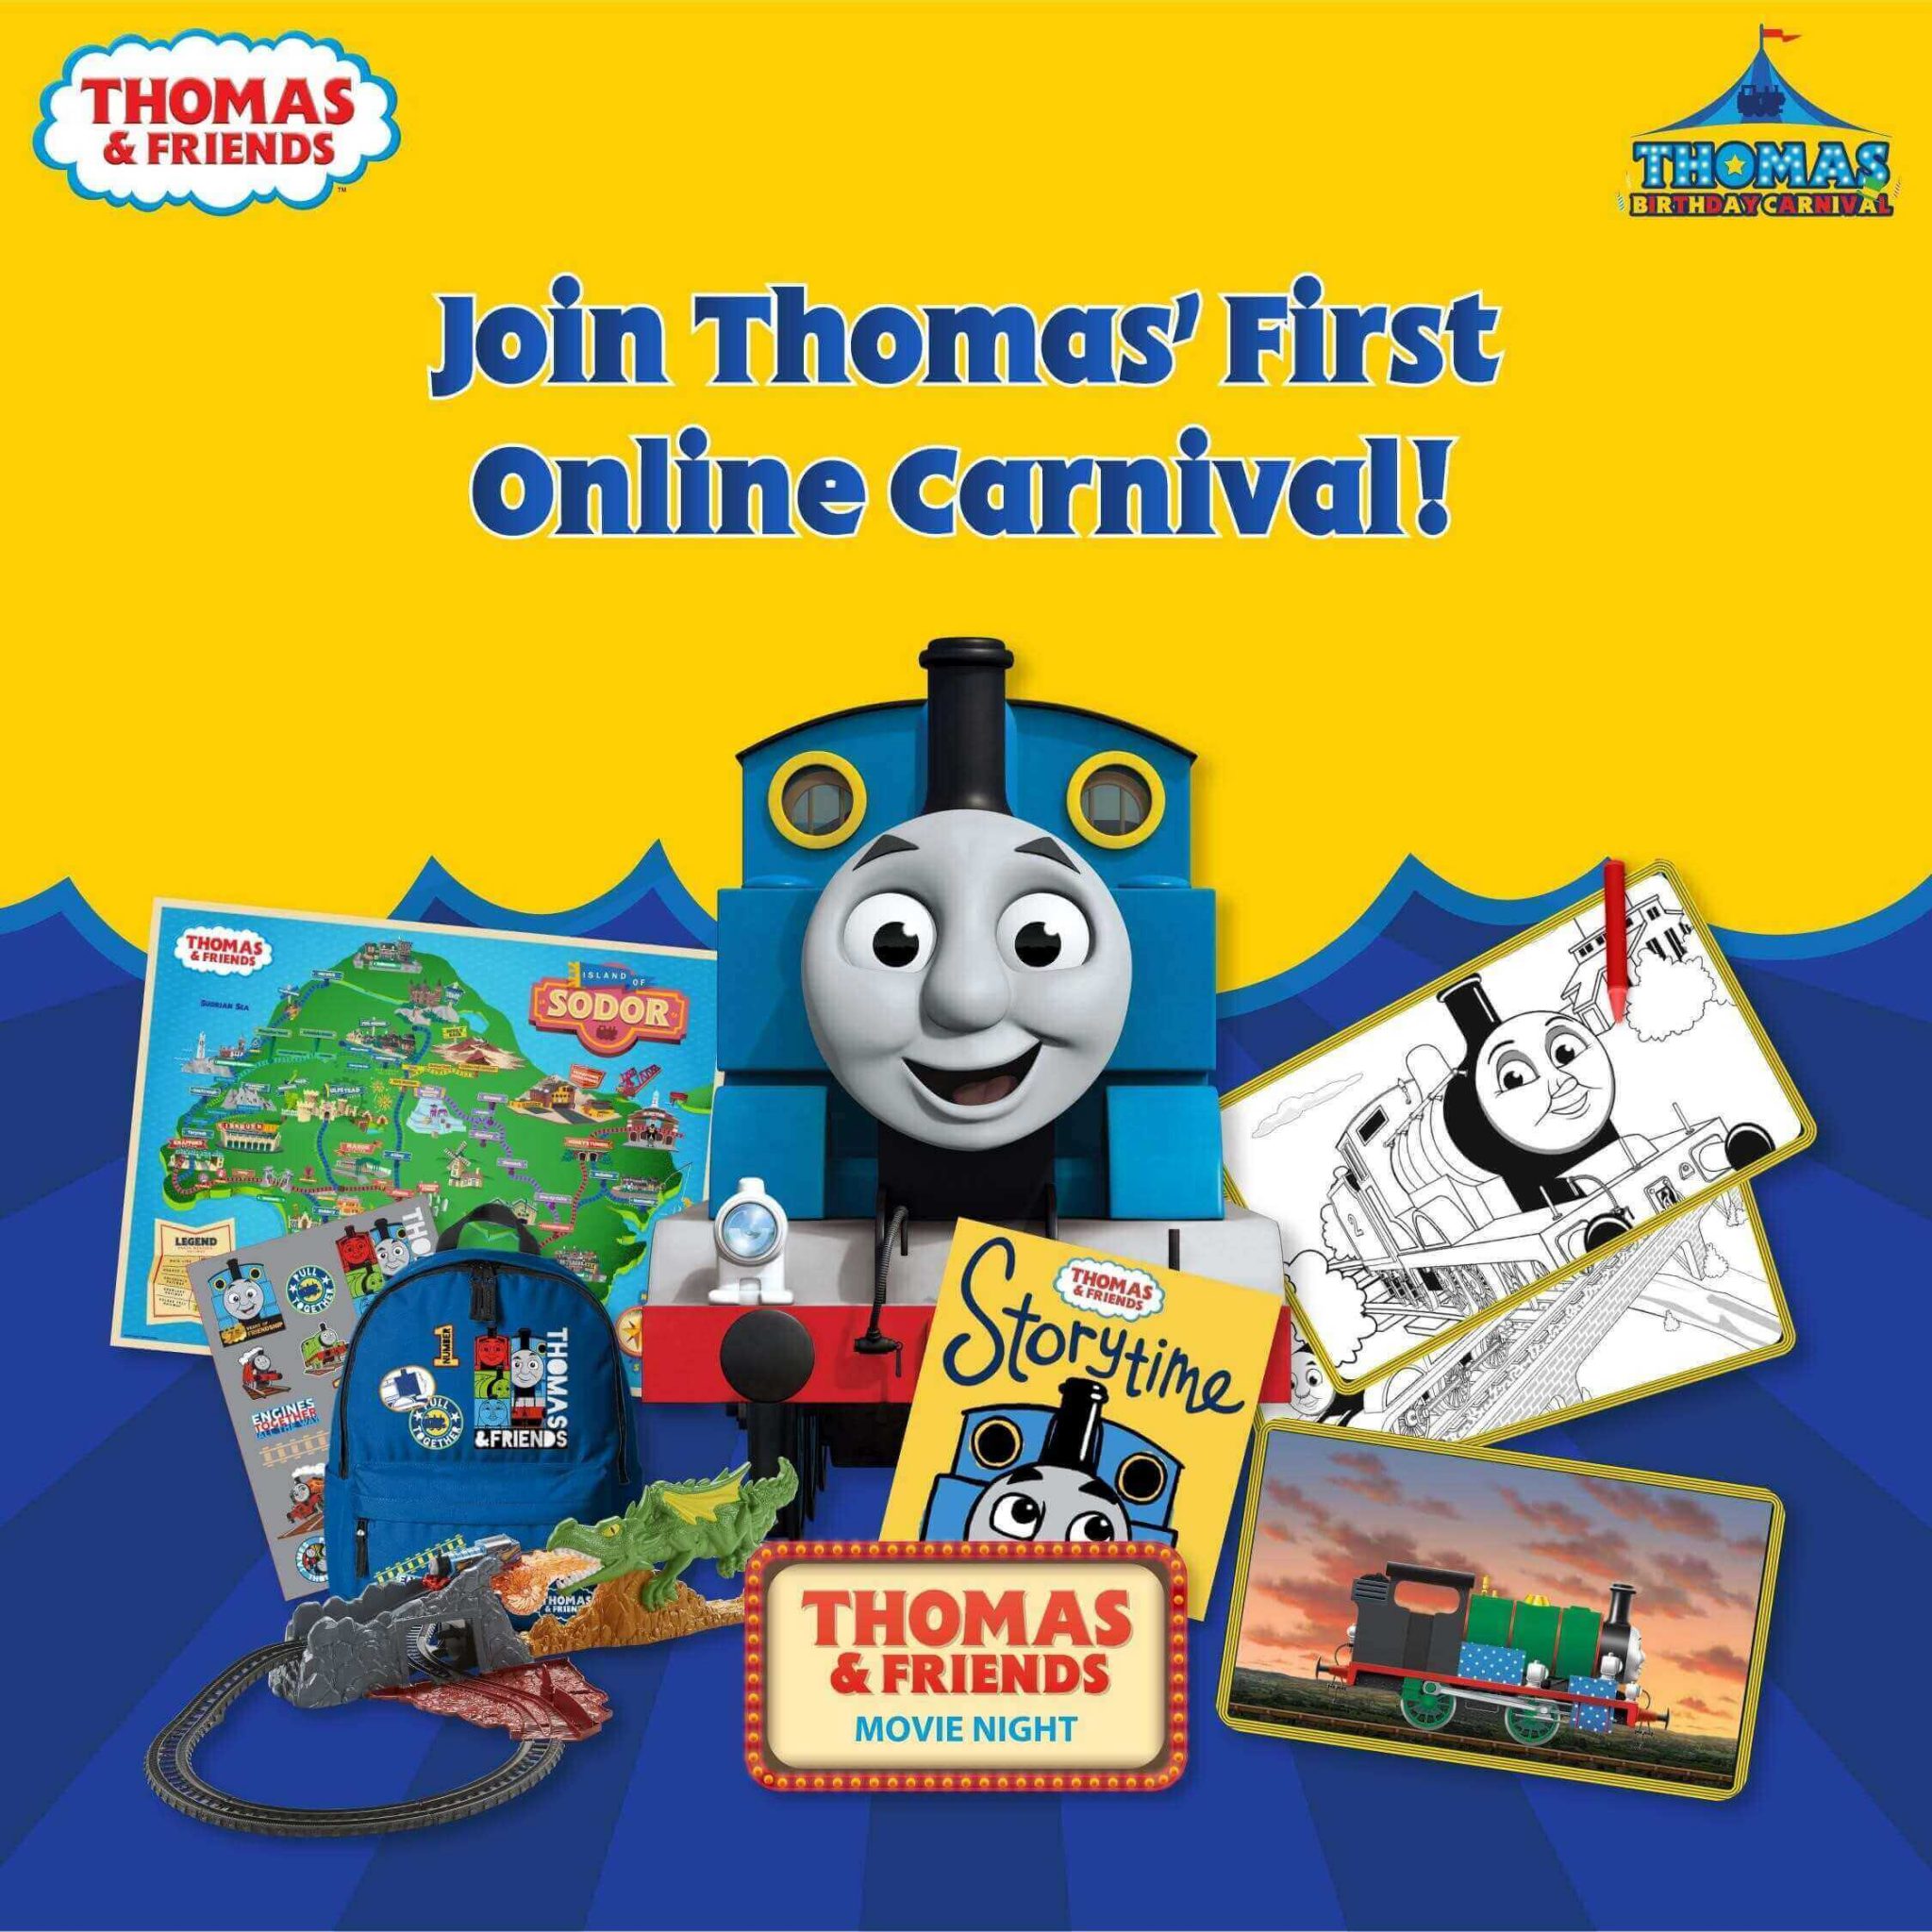 Thomas & friends online carnival